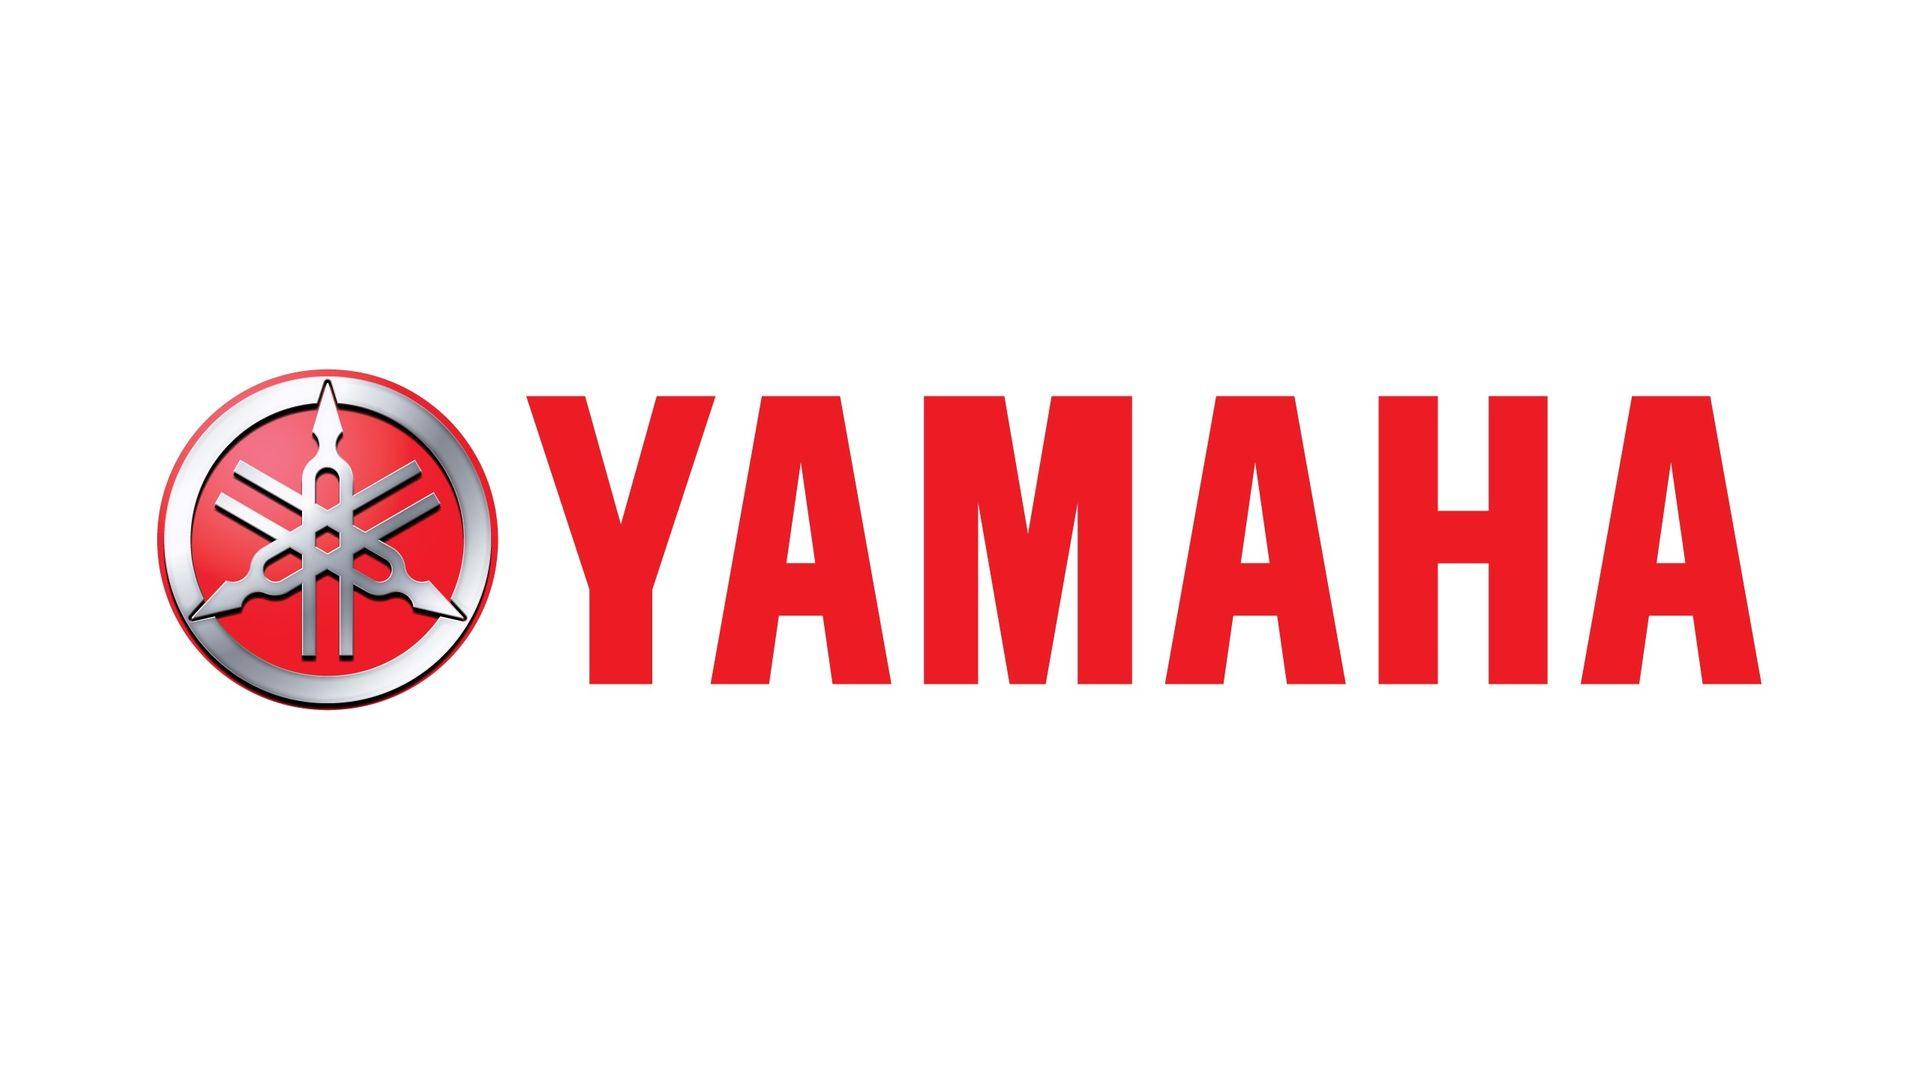 Yamaha Brand Logo with White Background Wallpaper